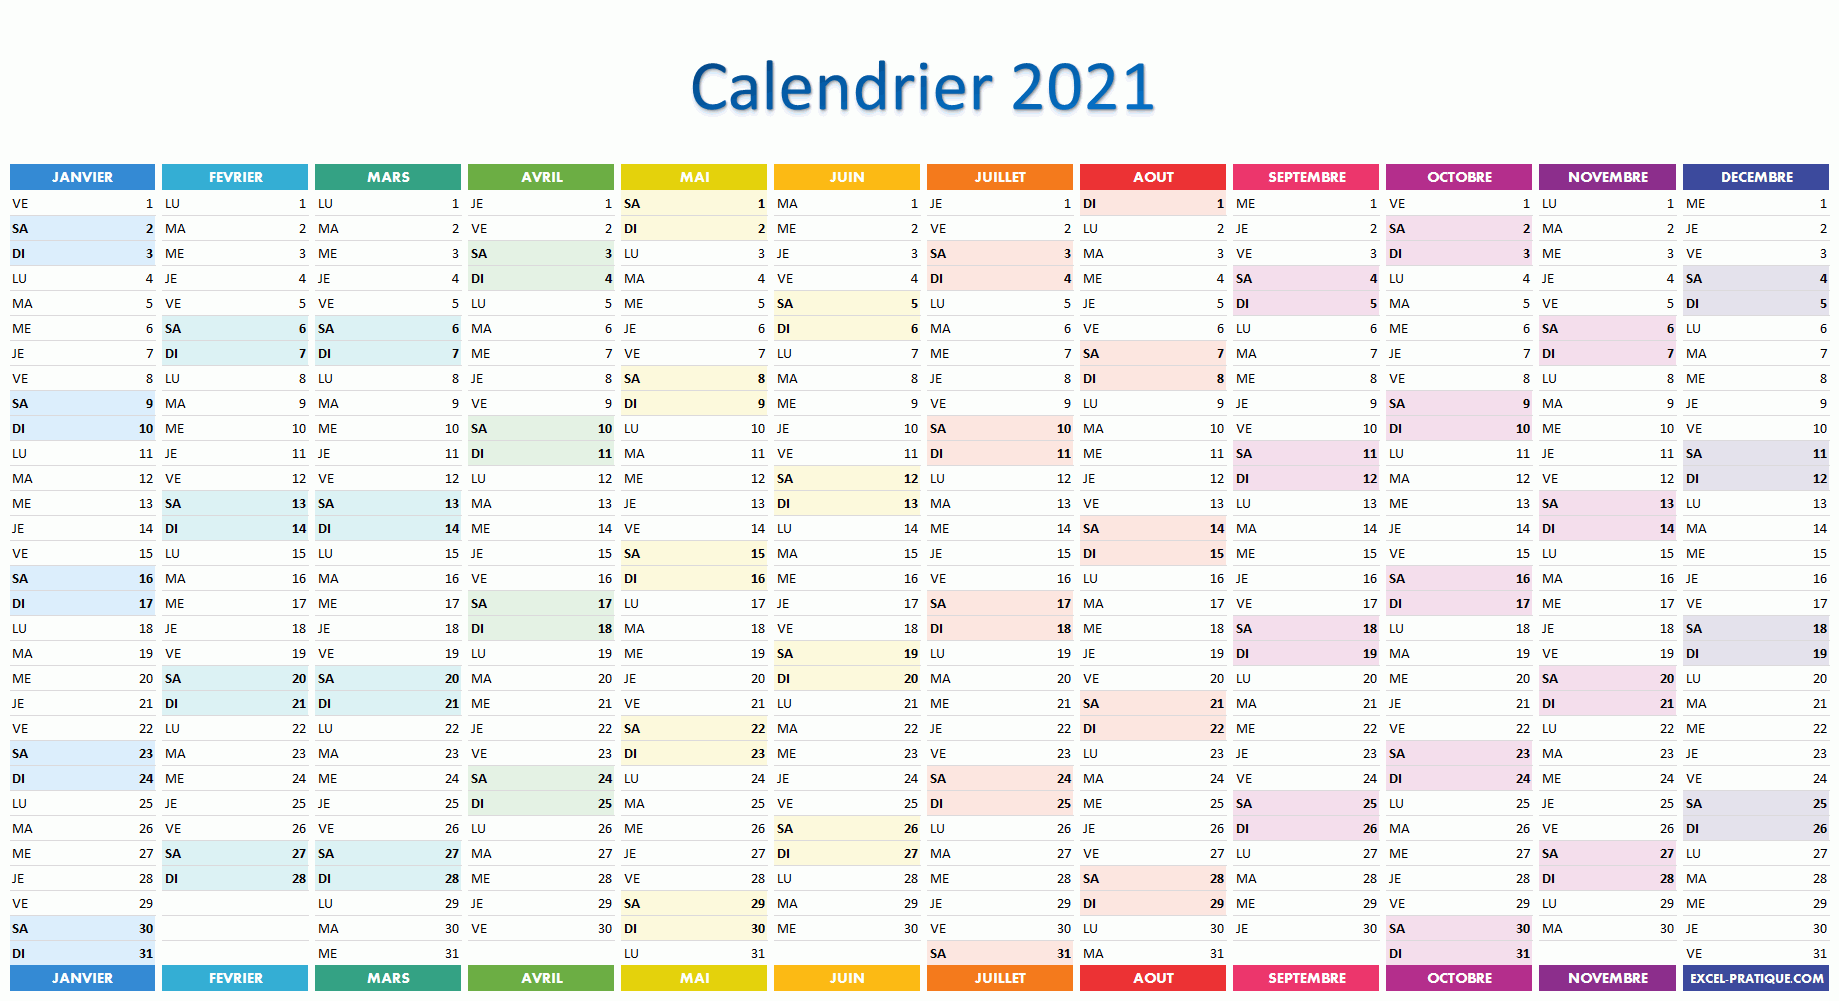 Le Calendrier 2021 Calendrier 2021 simple